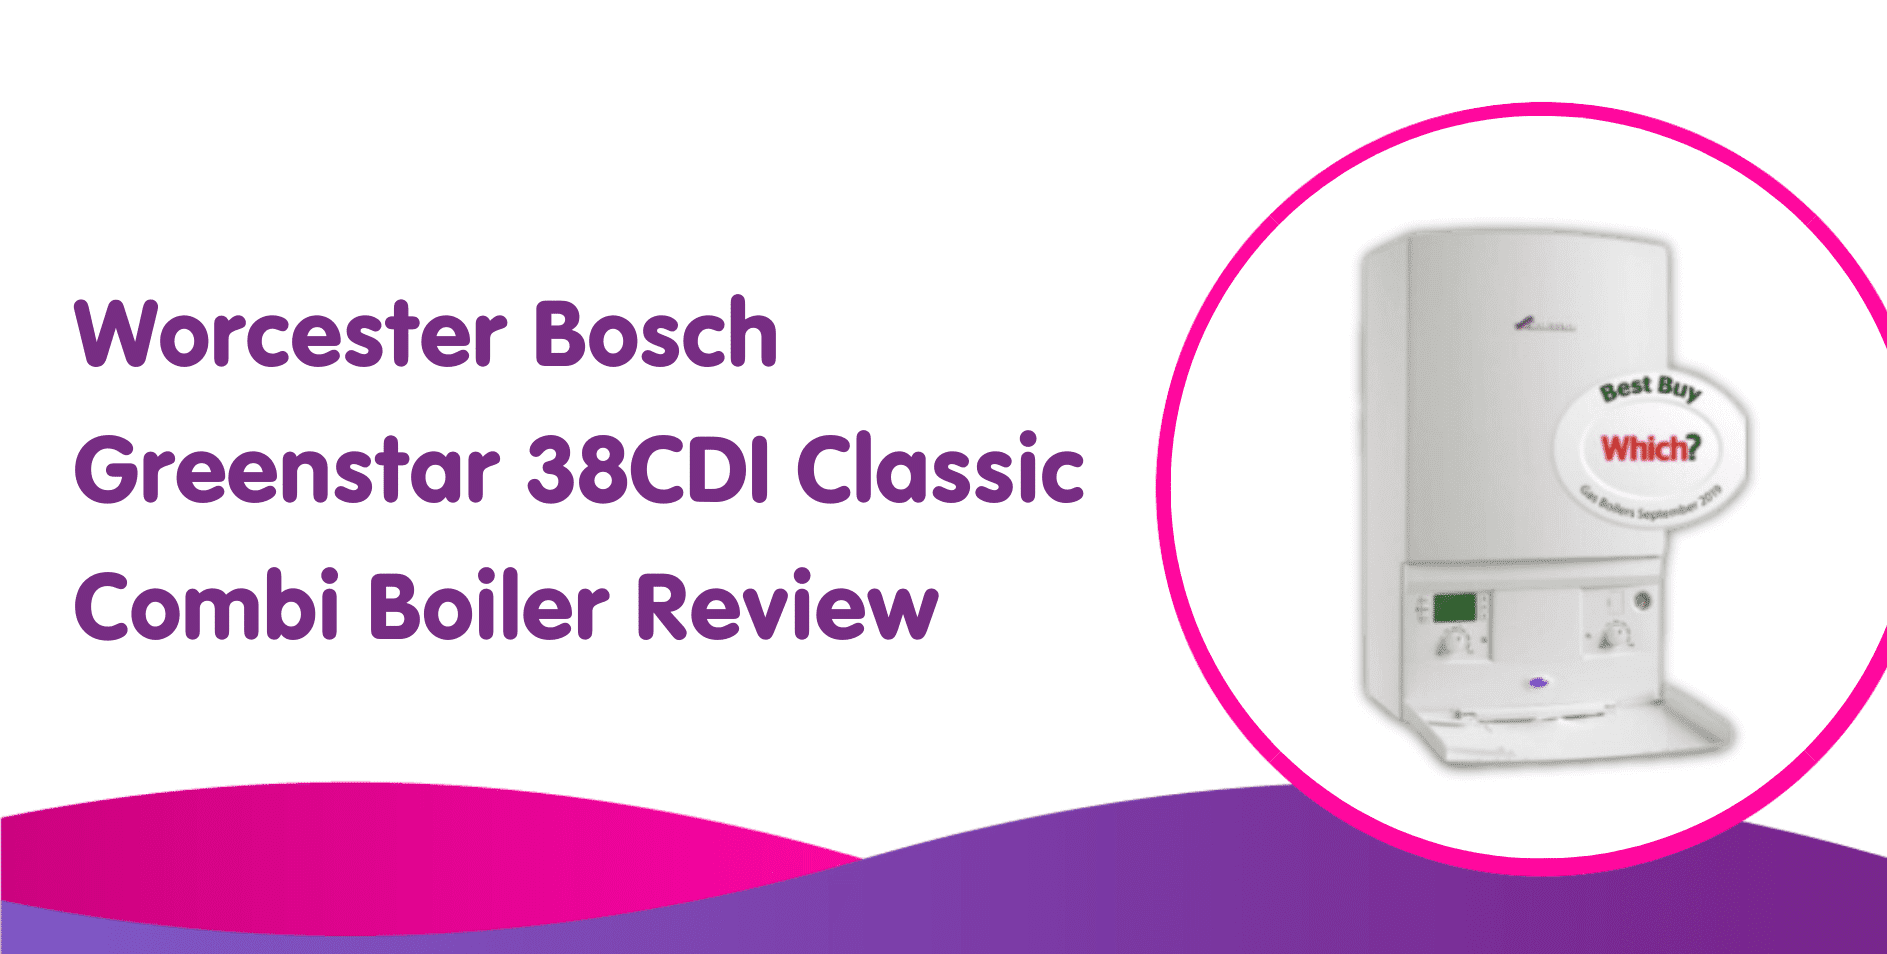 Worcester Bosch Greenstar 38CDI Classic Combi Boiler Review